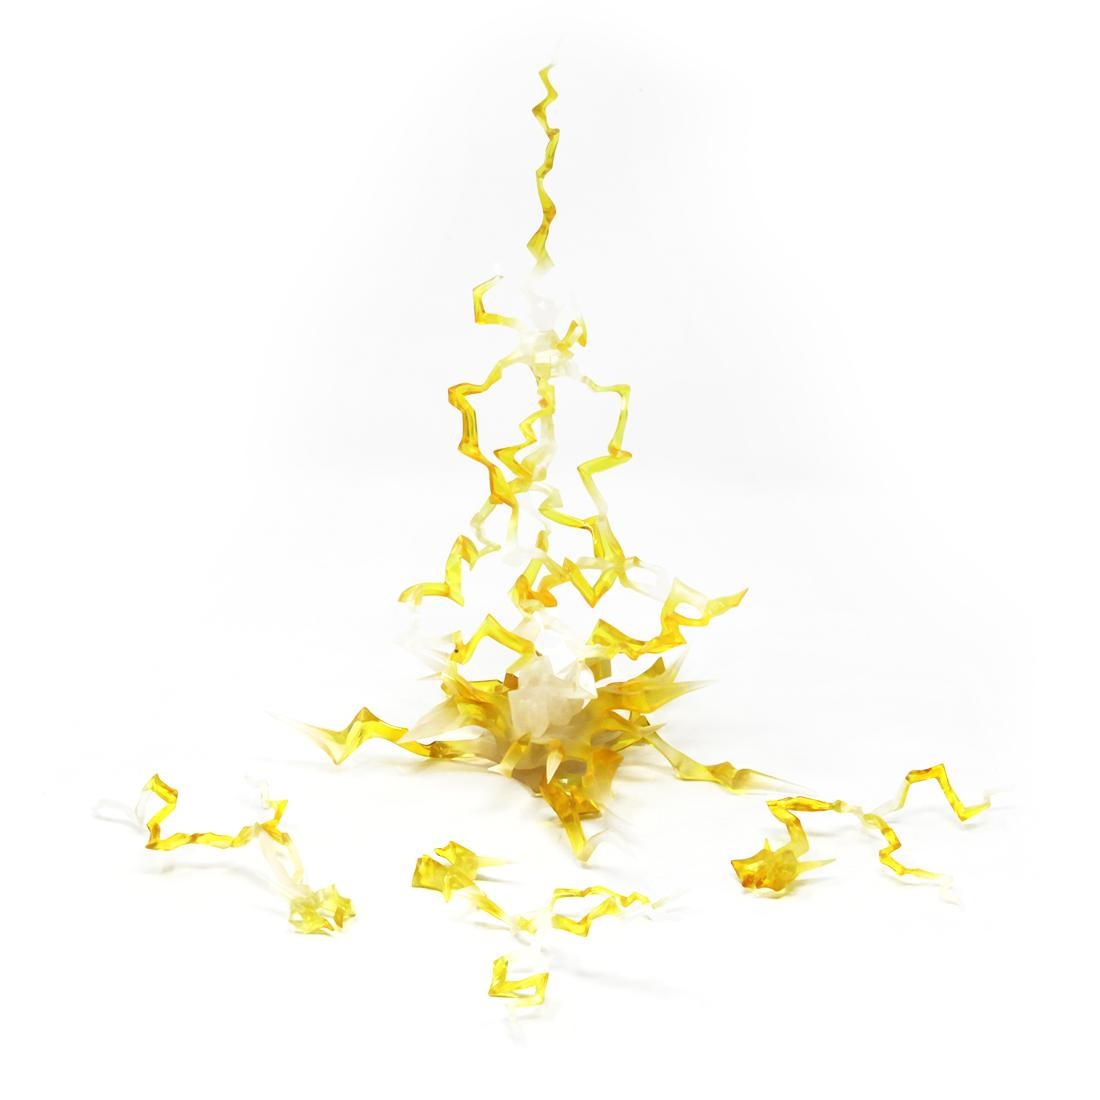 Bandai Tamashii Effect Soul Effect Thunder Yellow Ver. (yellow)